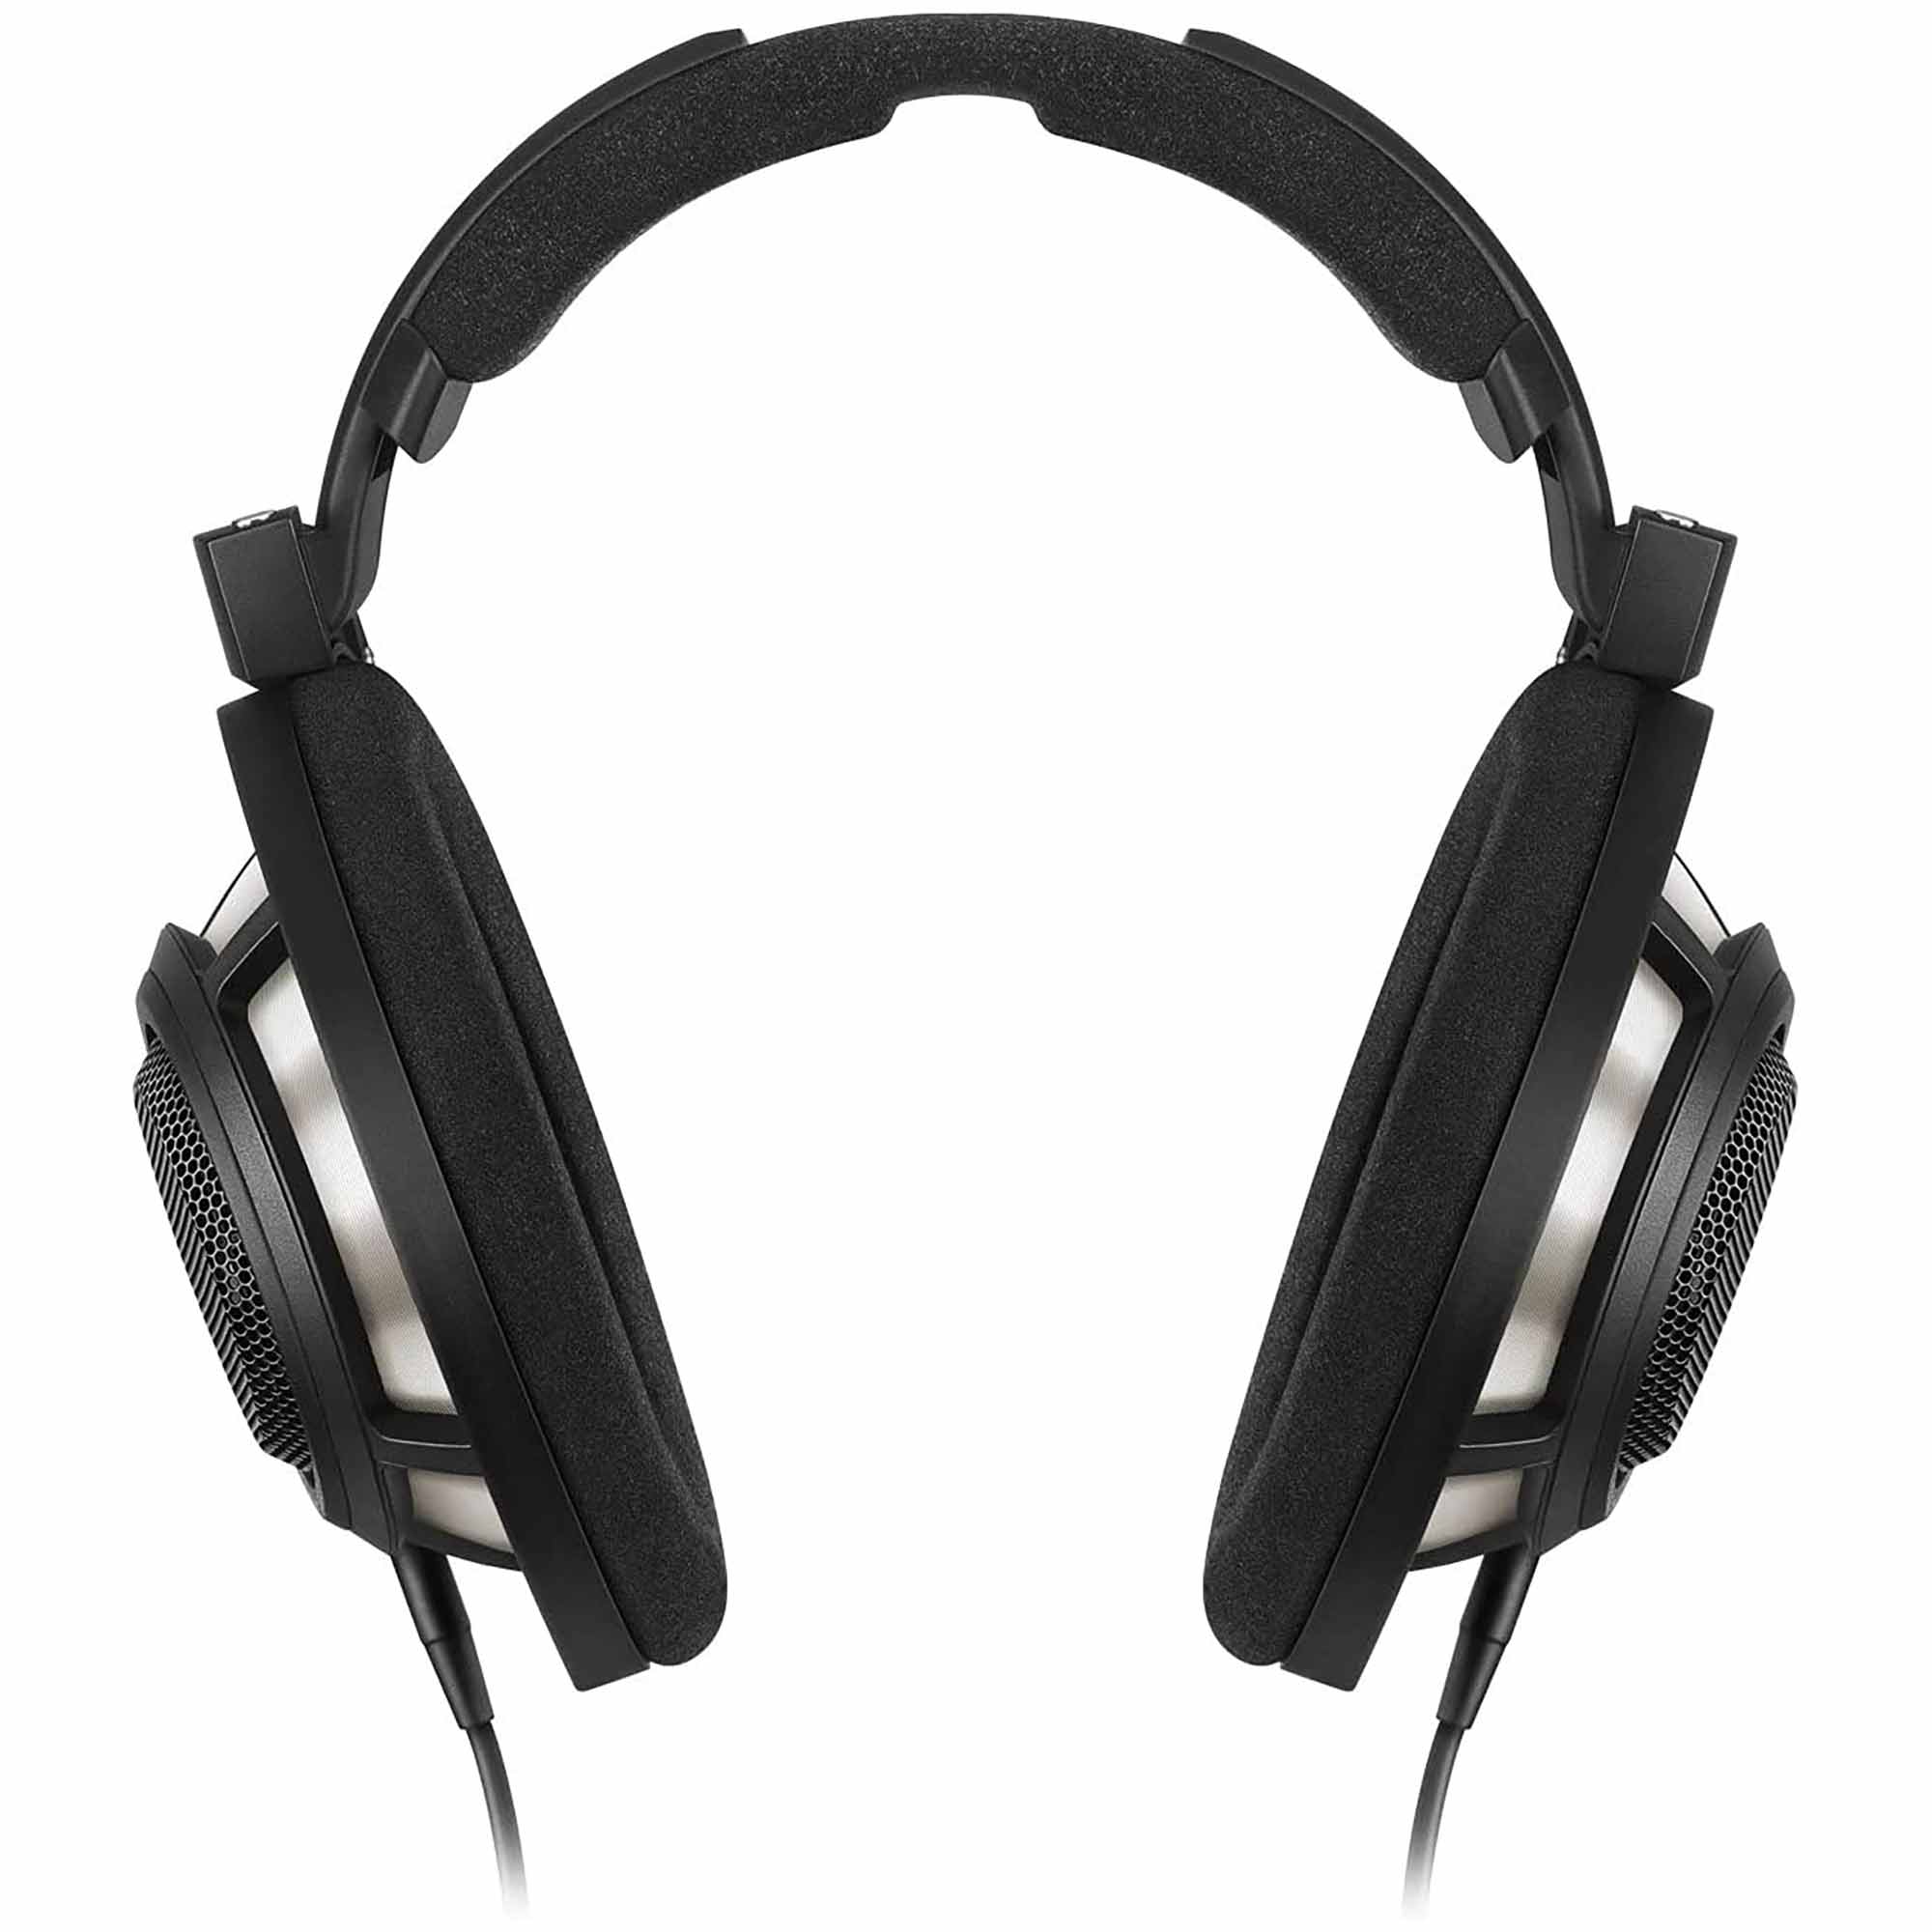 Sennheiser HD 560 S Over-The-Ear Audiophile Headphones for sale online